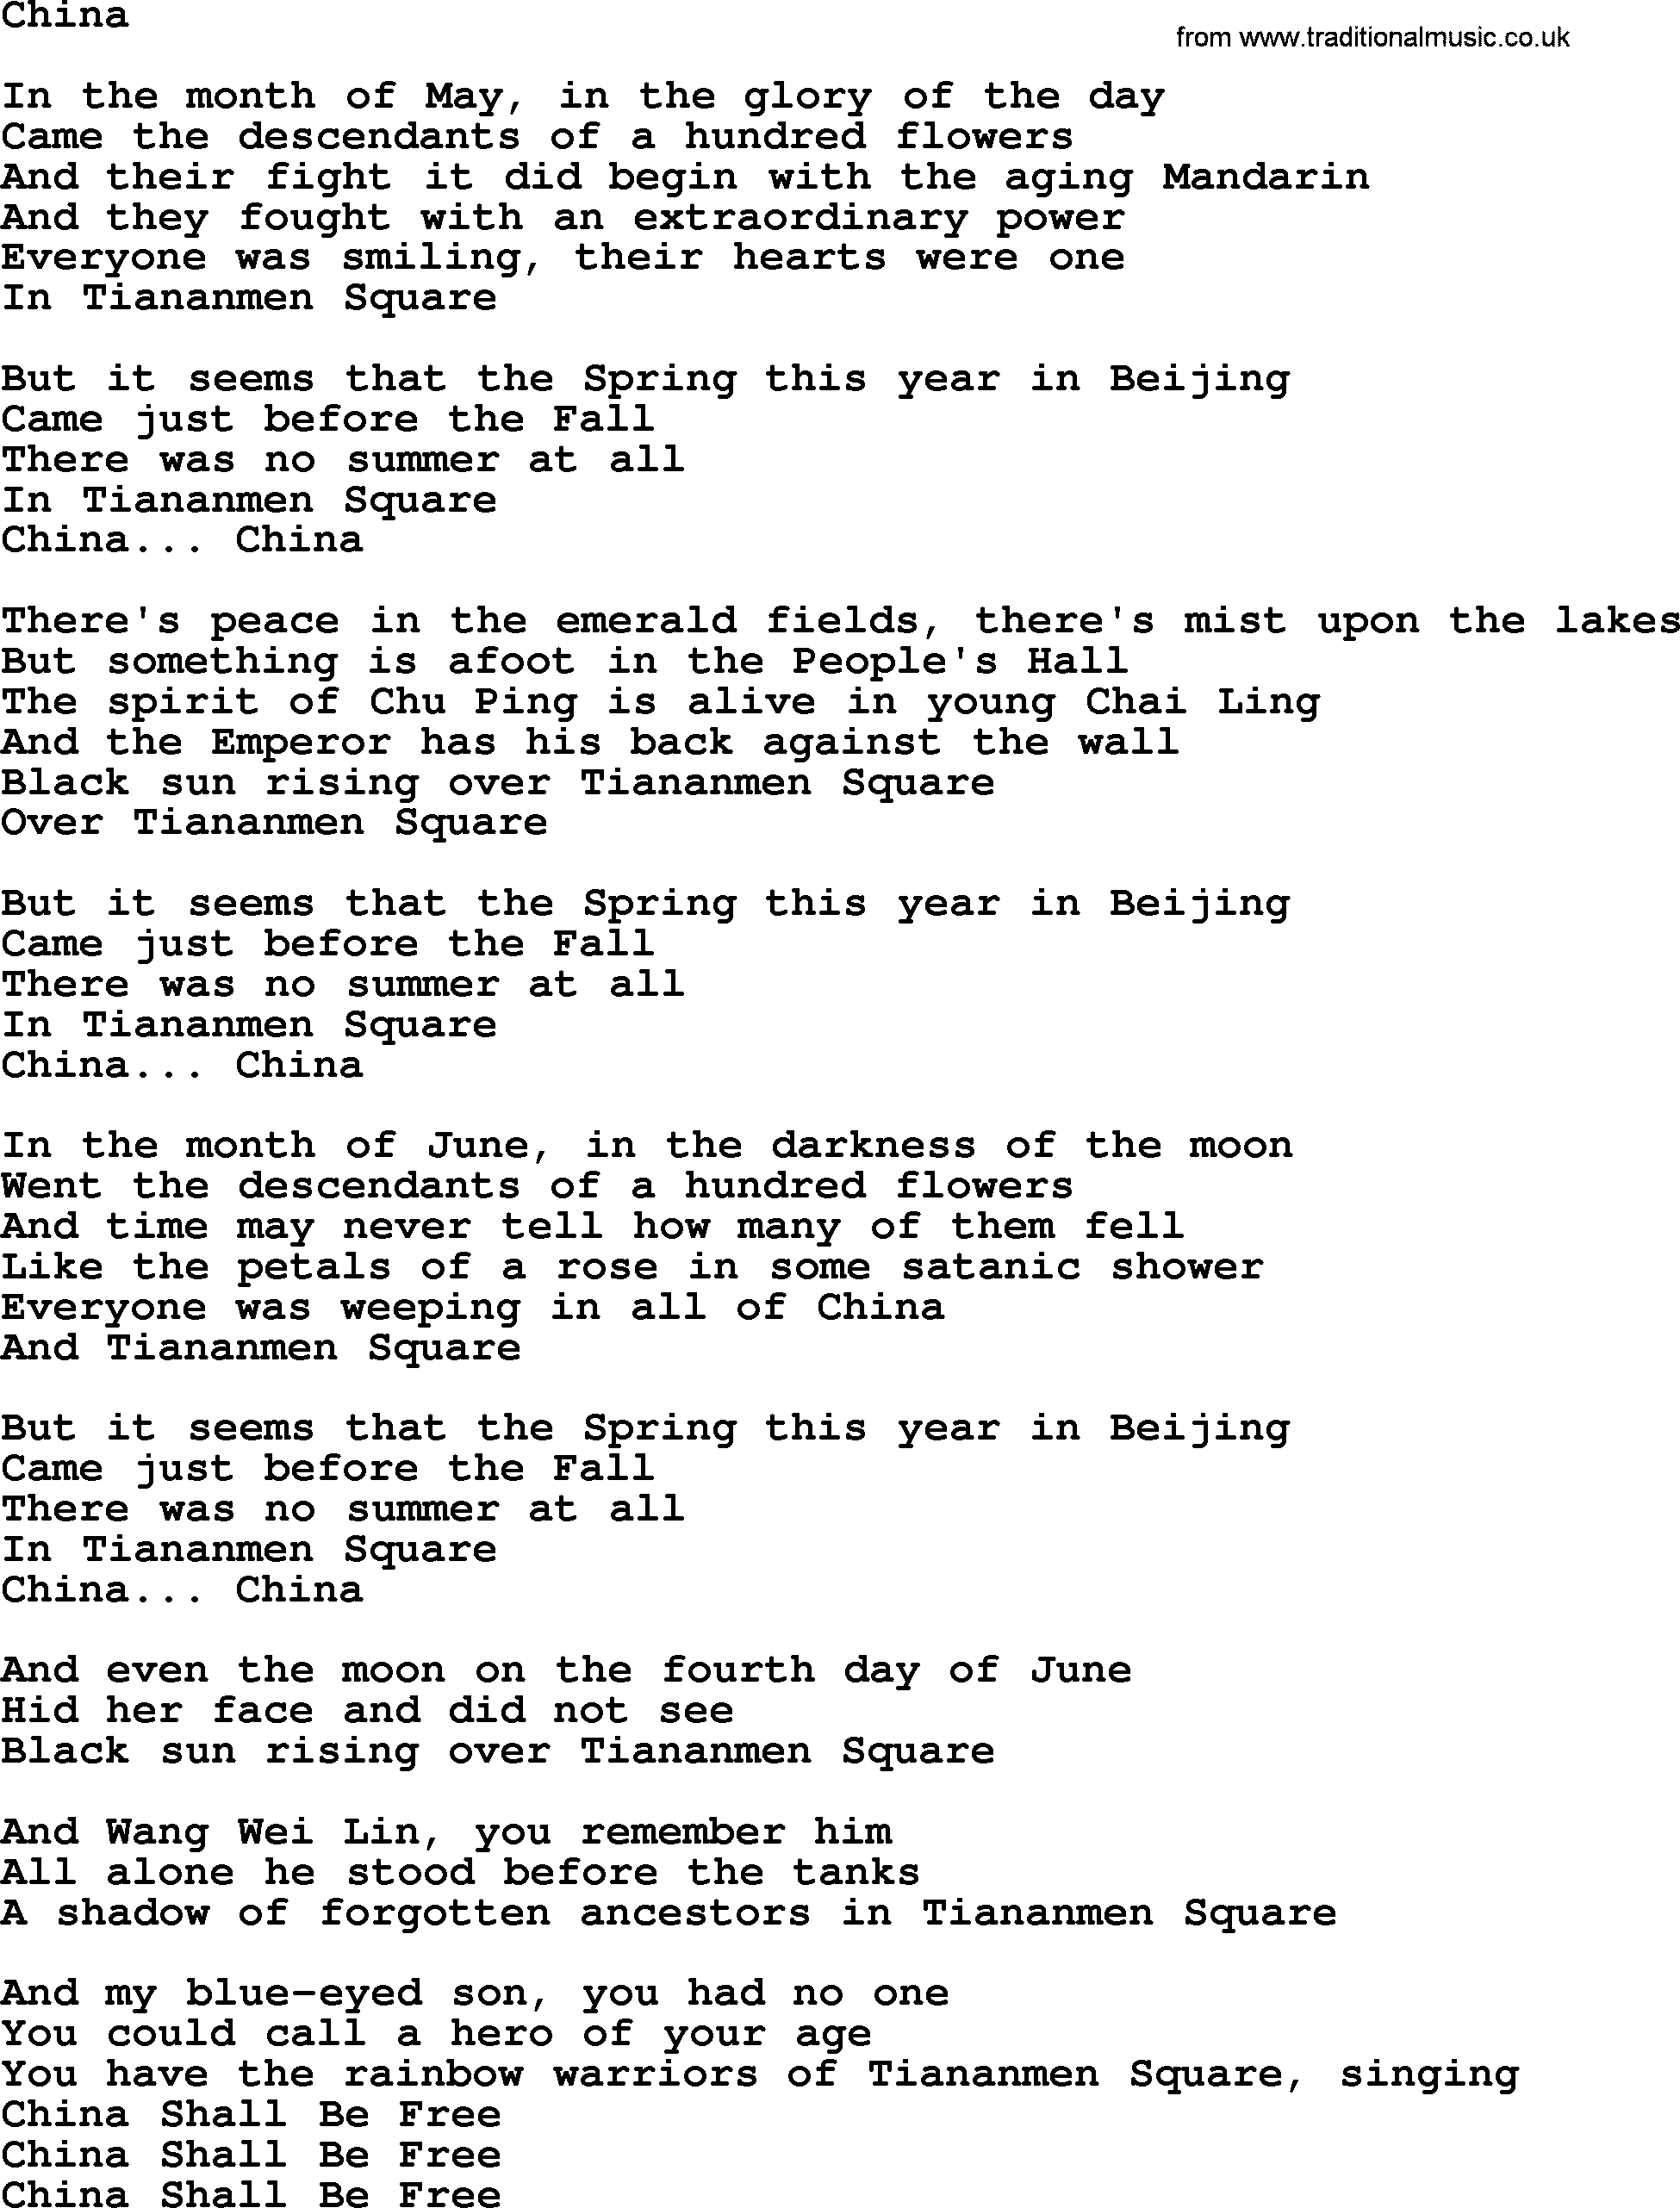 Joan Baez song China, lyrics